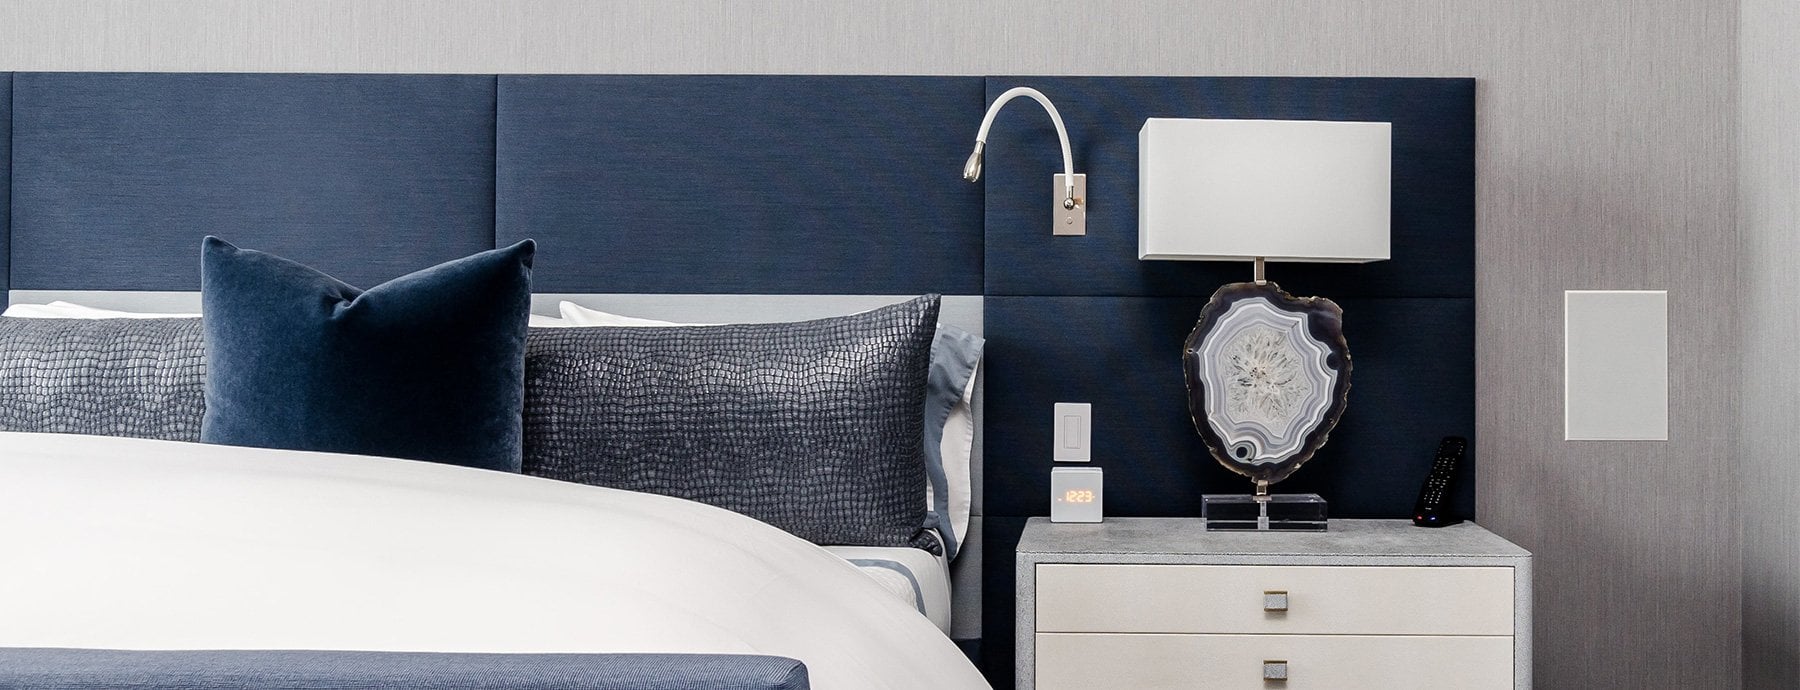 Relaxing Navy Blue Bedroom Ideas 